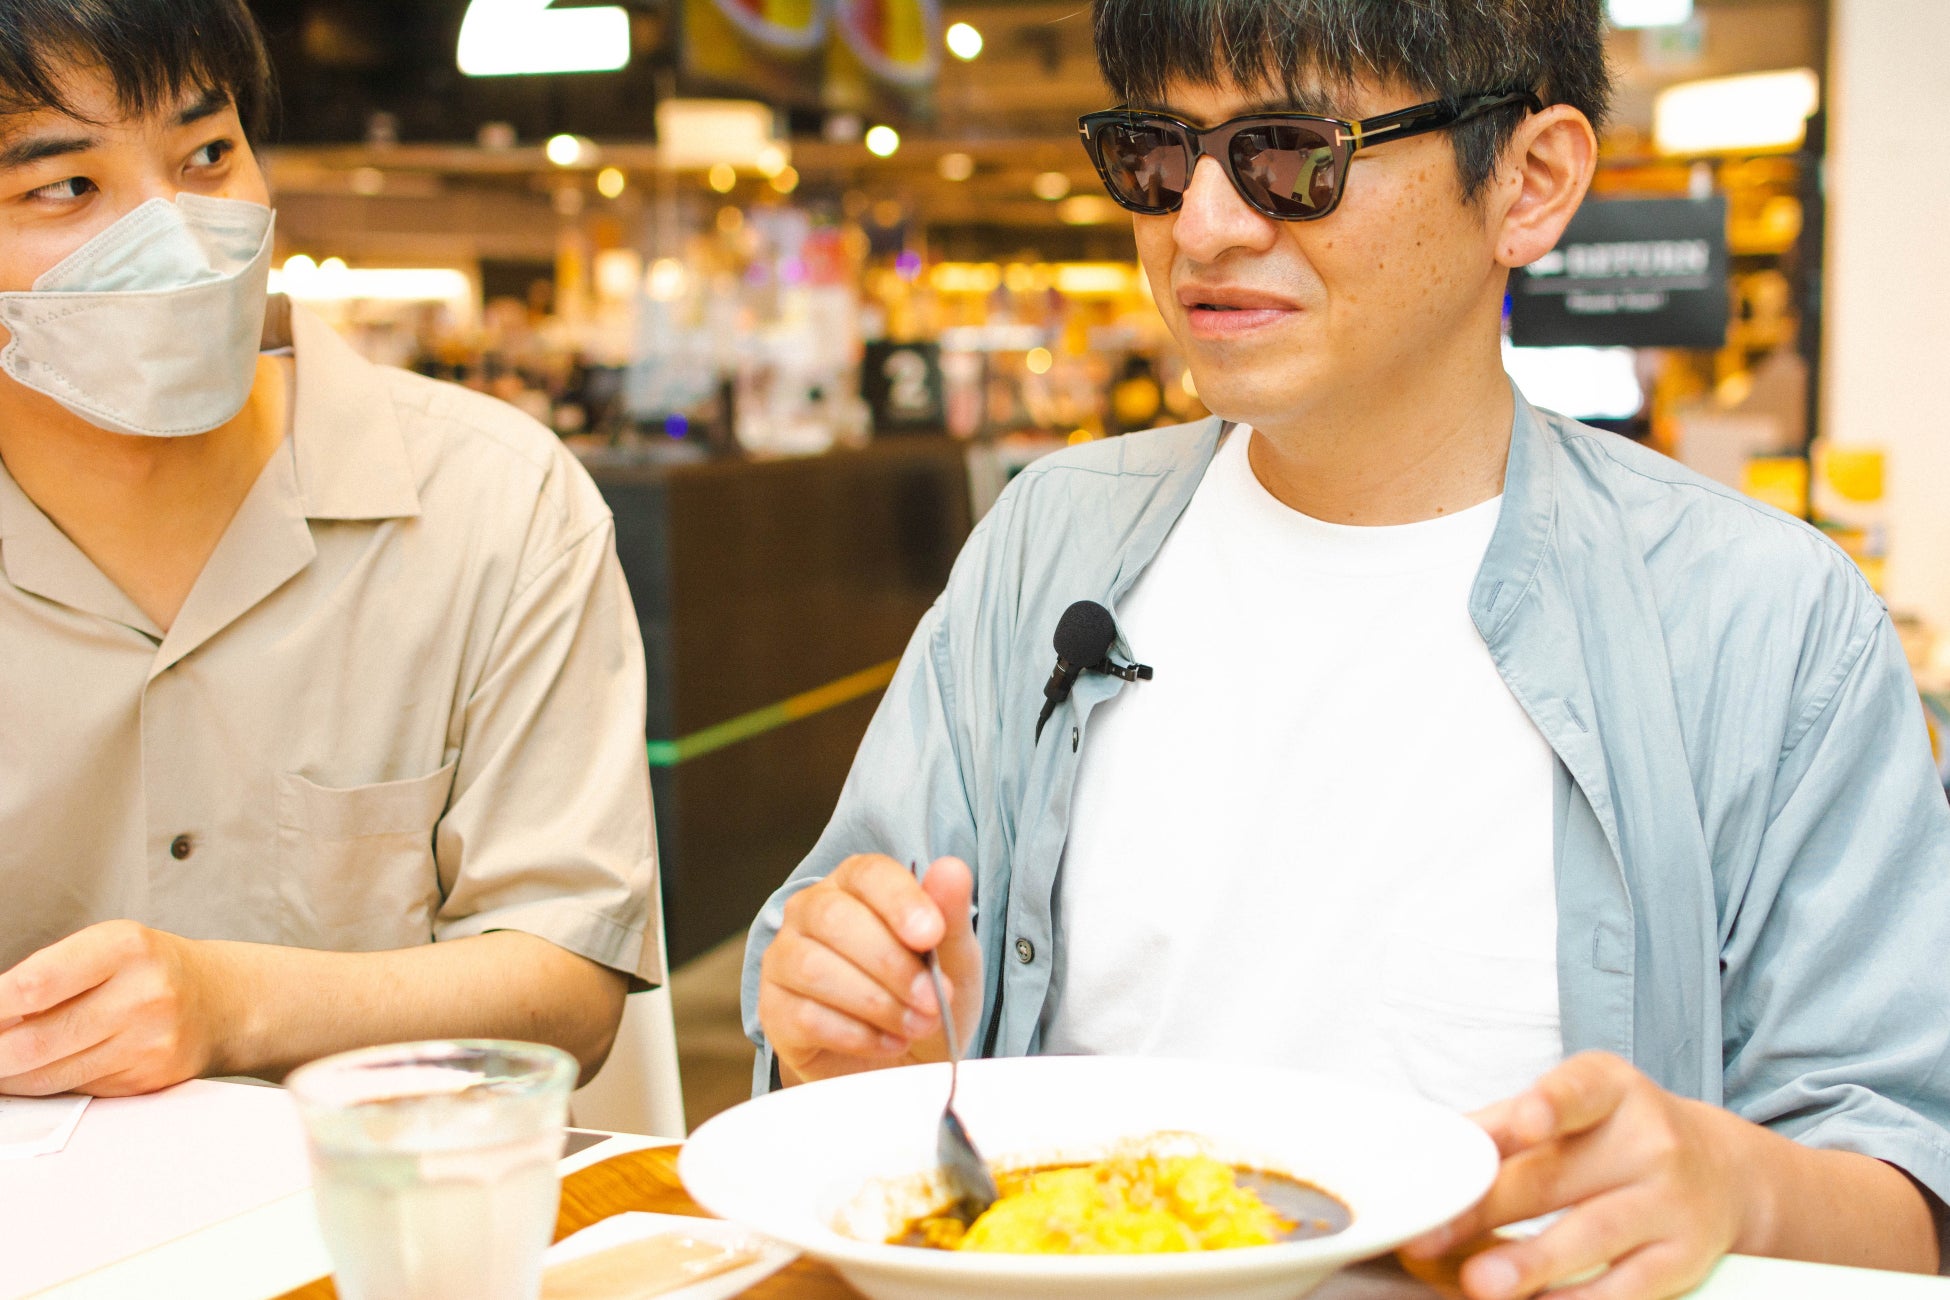 2food 渋谷ロフト店にて、一口食べた感想をレポートする栗山さん